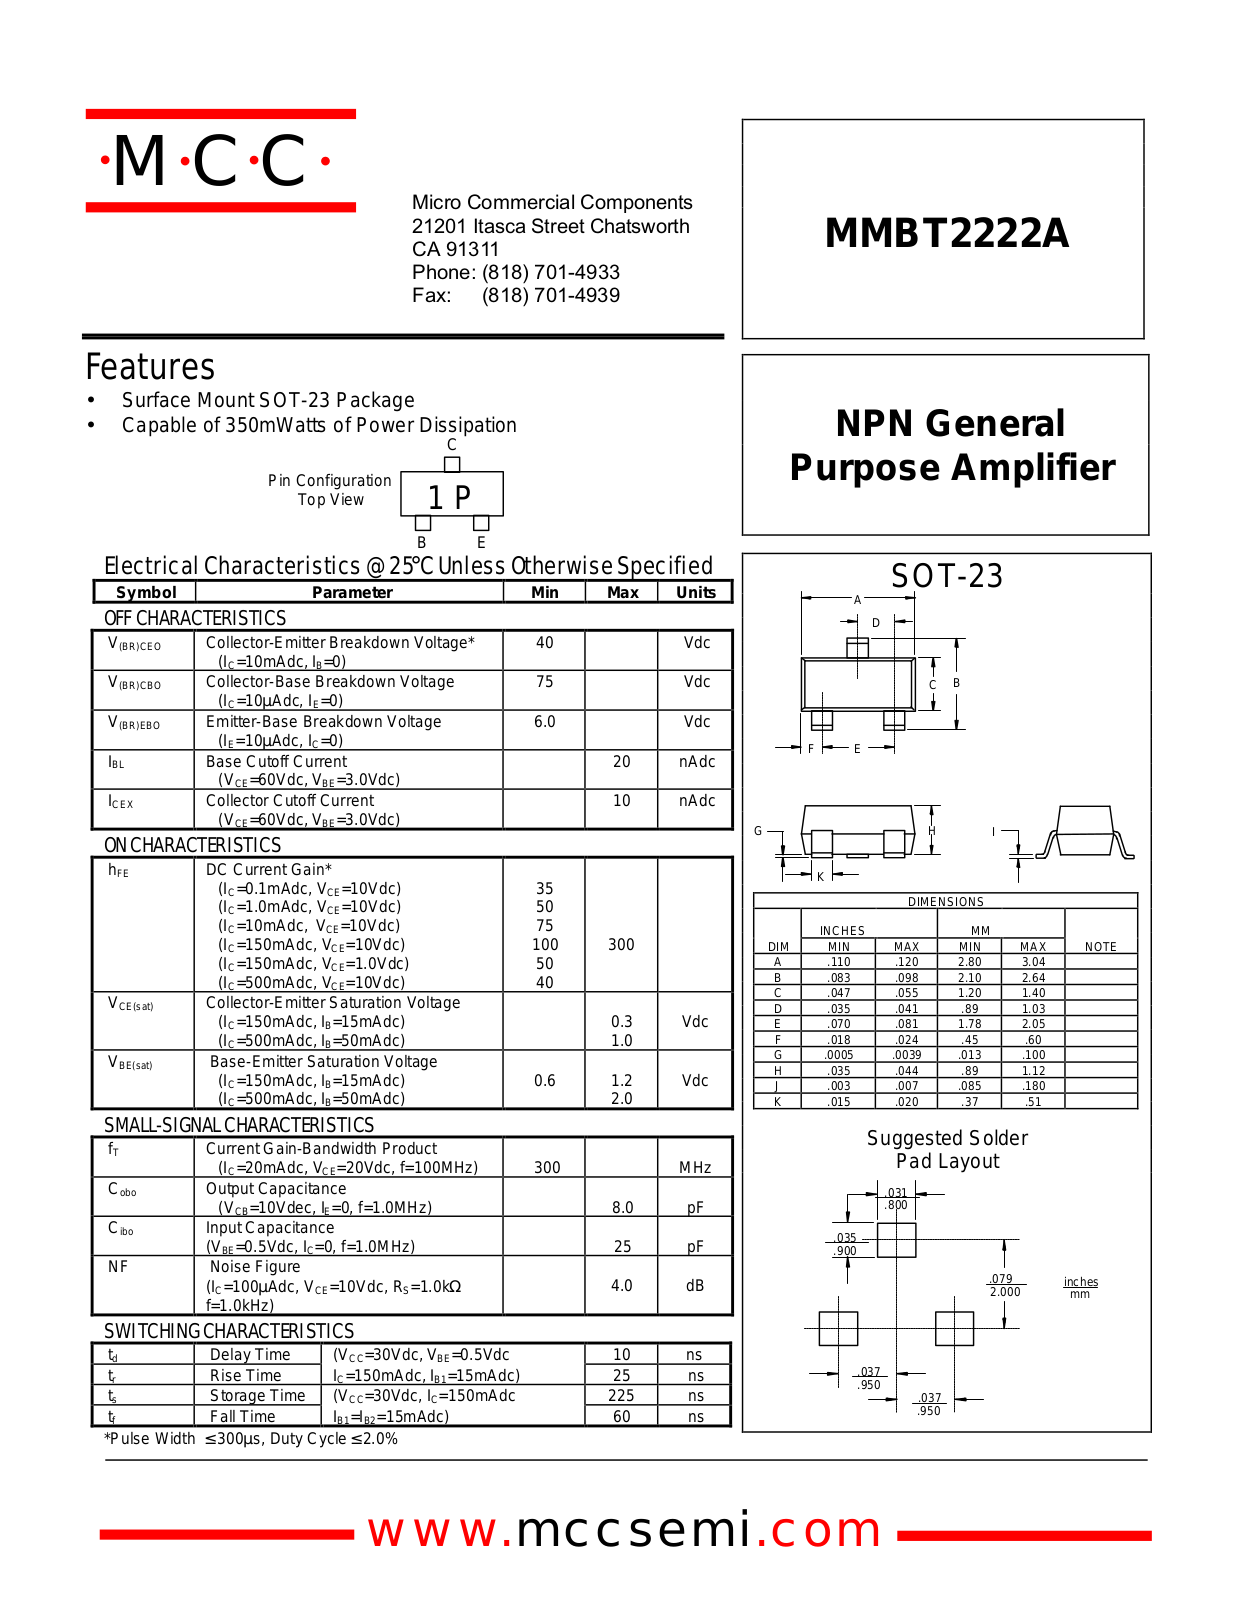 MCC MMBT2222A Datasheet